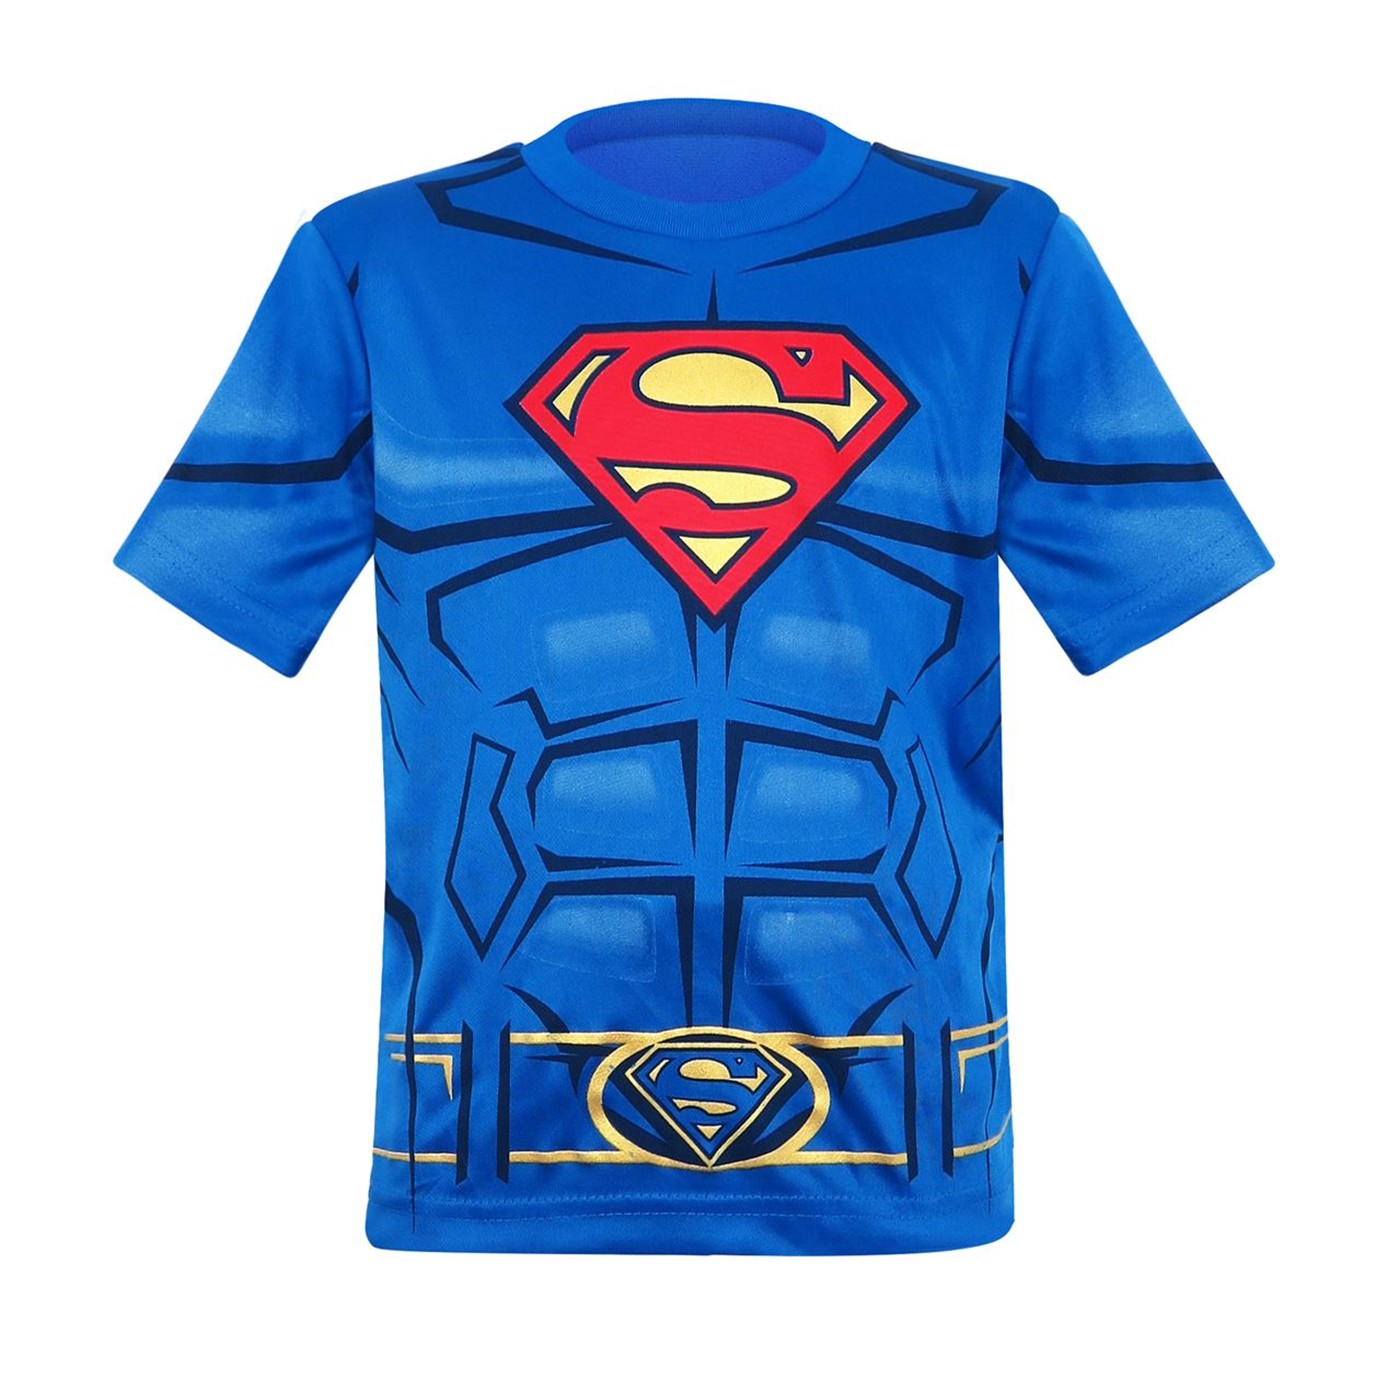 Superman Toddler Costume T-Shirt & Short Set